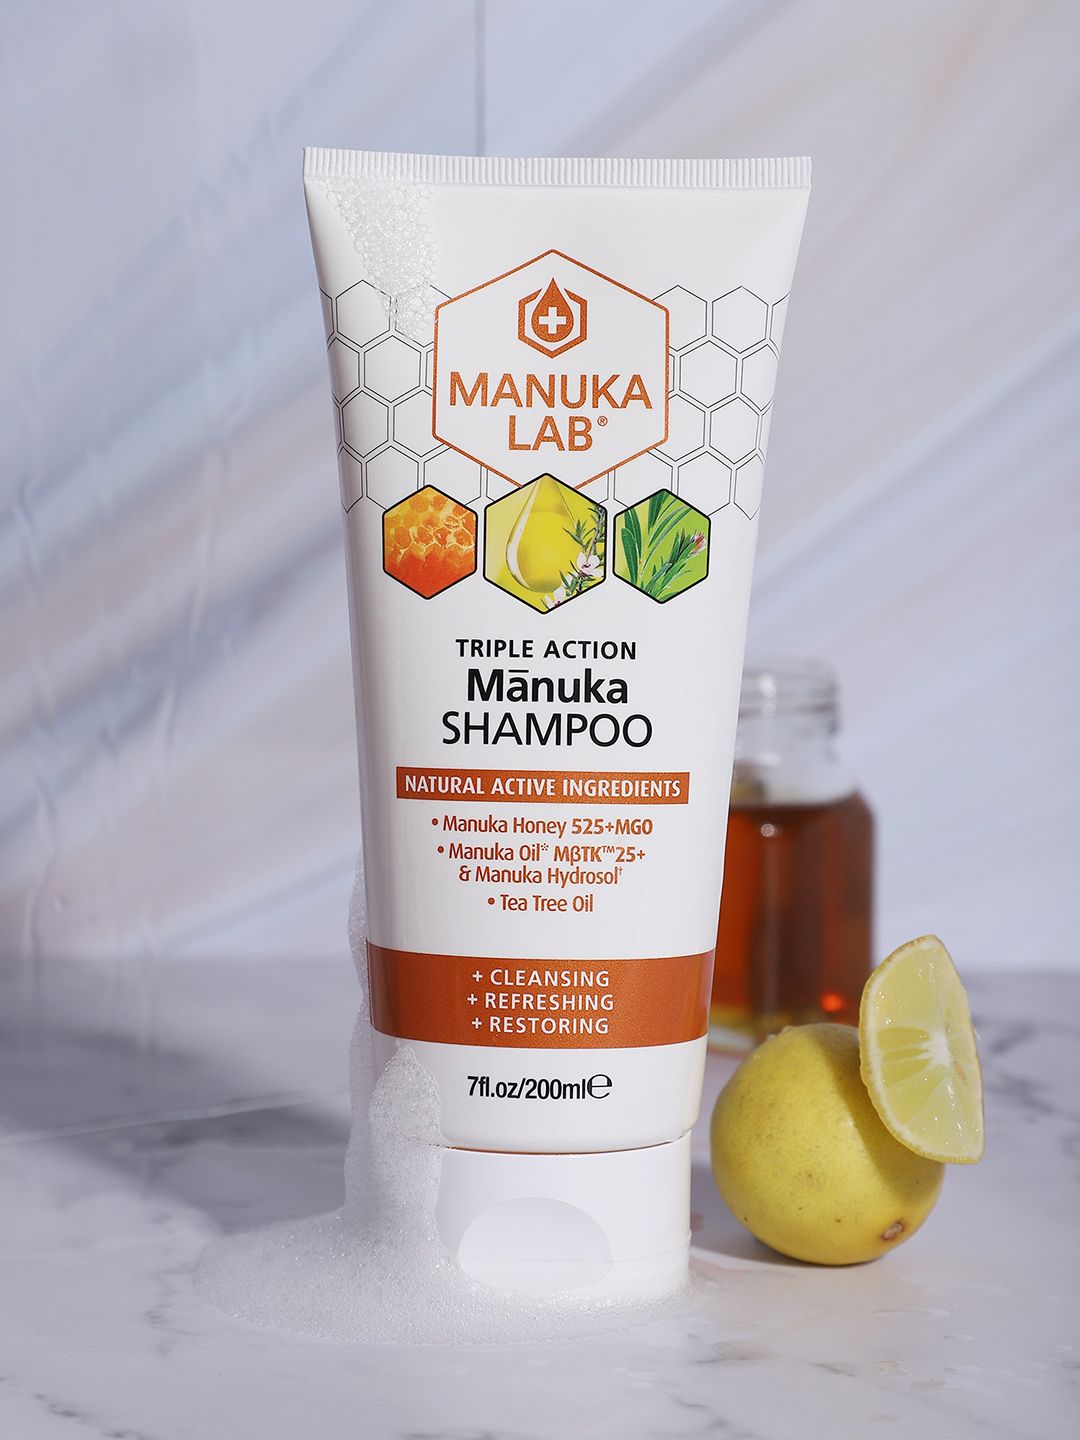 MELORA Manuka Lab Triple Action Shampoo with Honey & Tea Tree Oil - 200ml Price in India